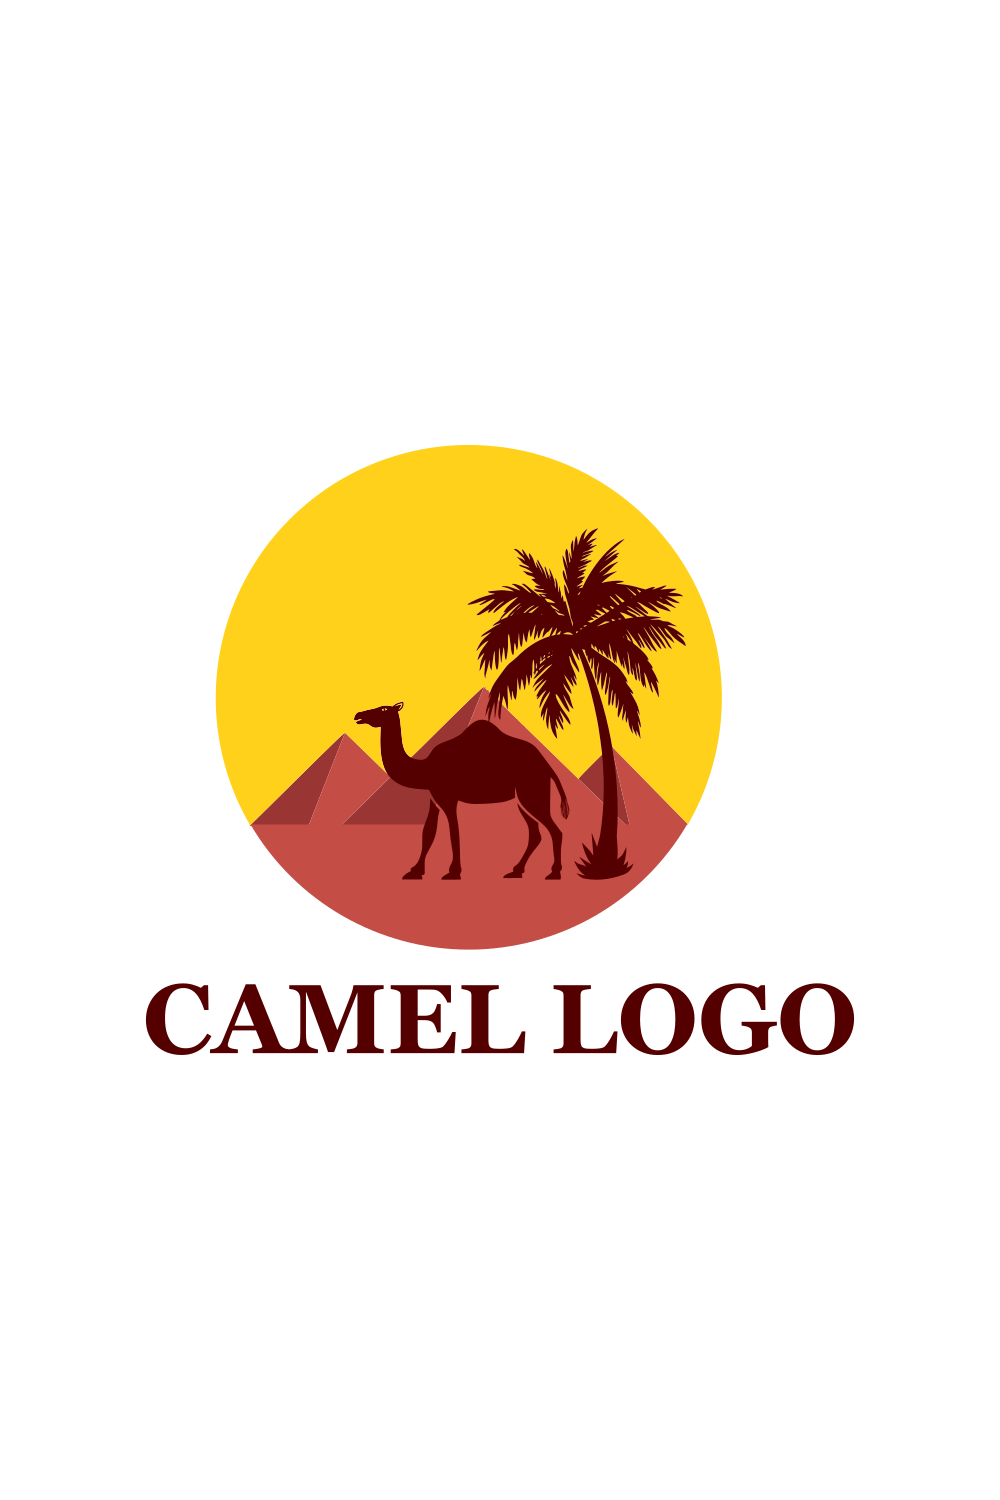 Classic Style Camel Logo Design Template pinterest image.